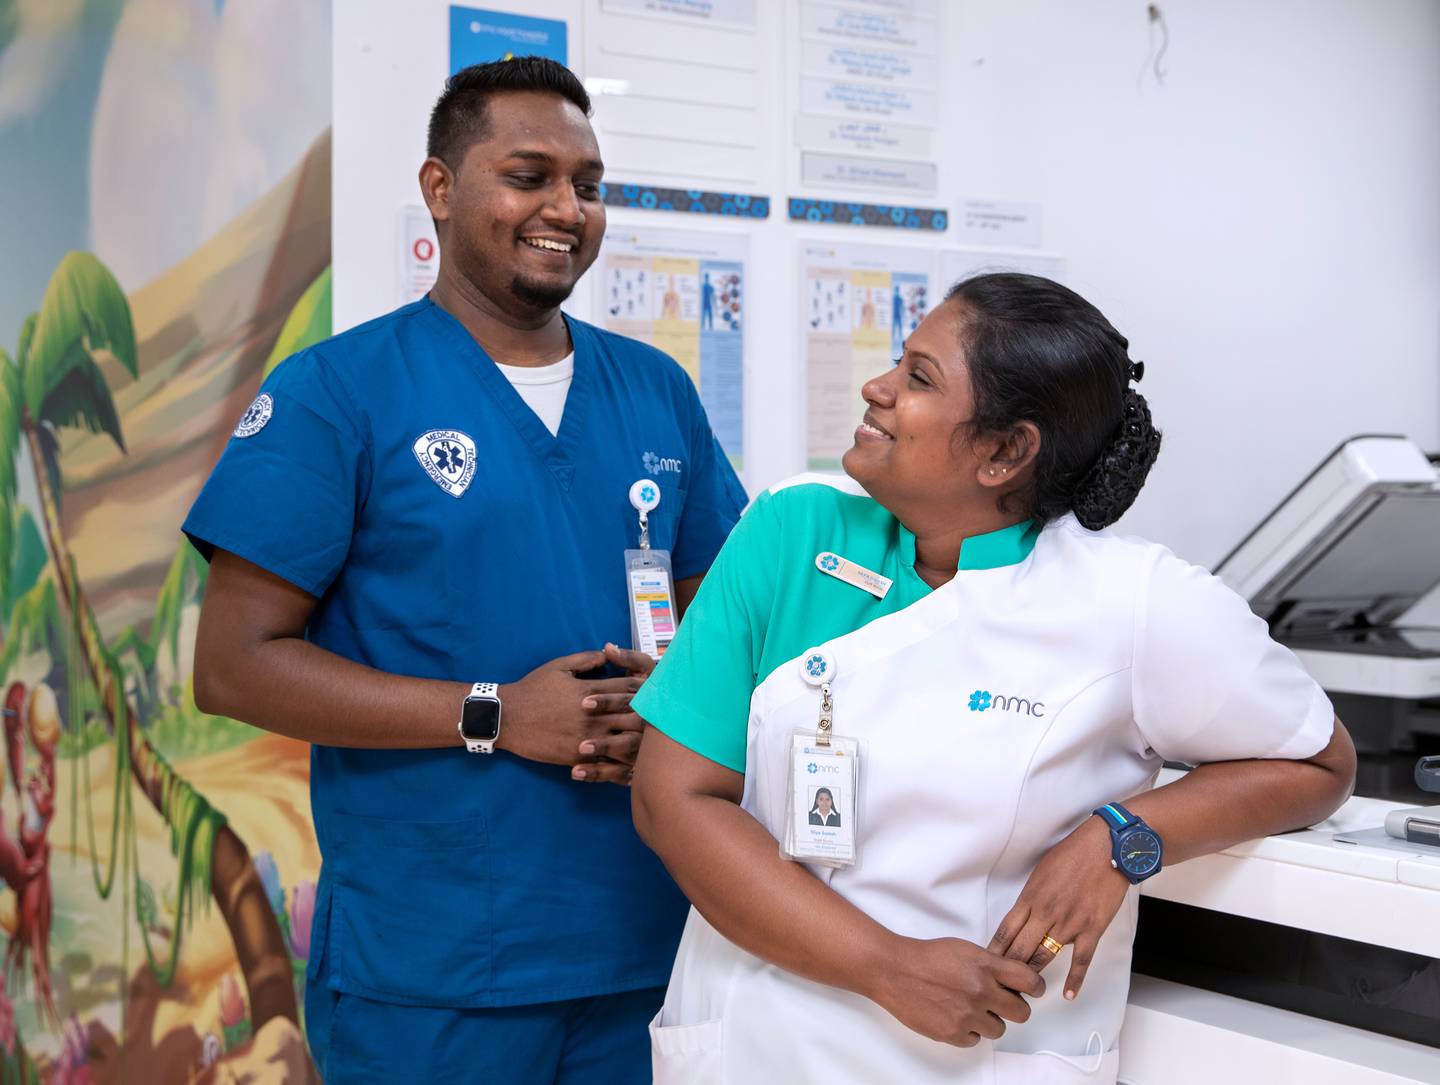 Nurse Silpa Suresh and husband ER nurse, Jephy Antony at NMC Royal Hospital DIP in Dubai. Victor Besa / The National